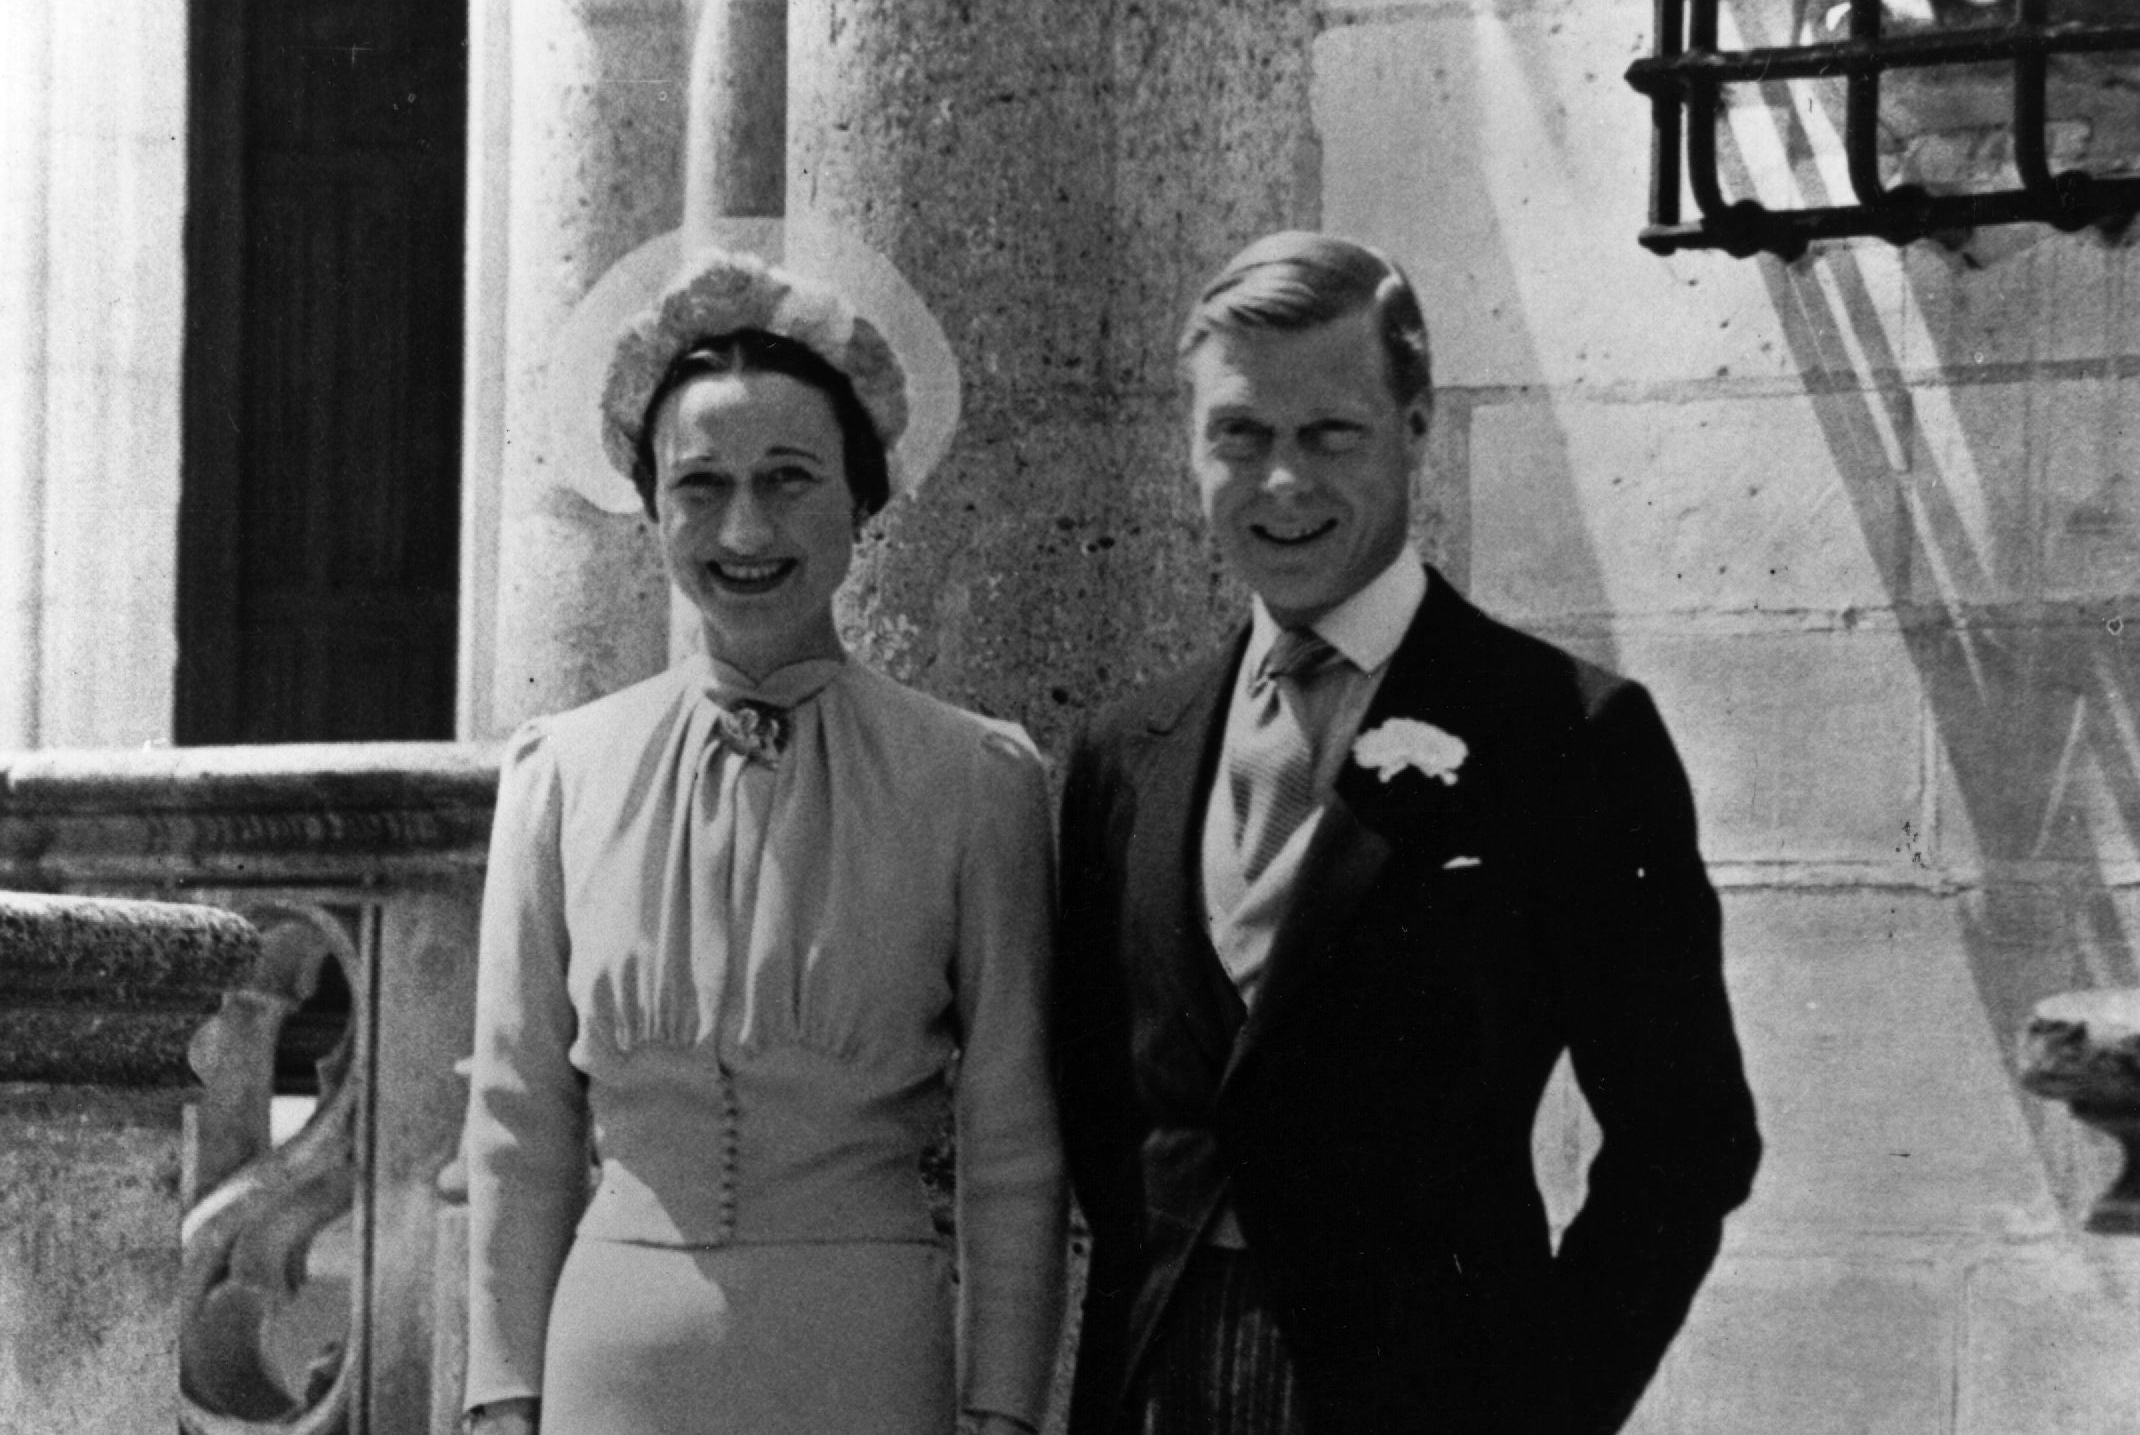 The pair married in June 1937